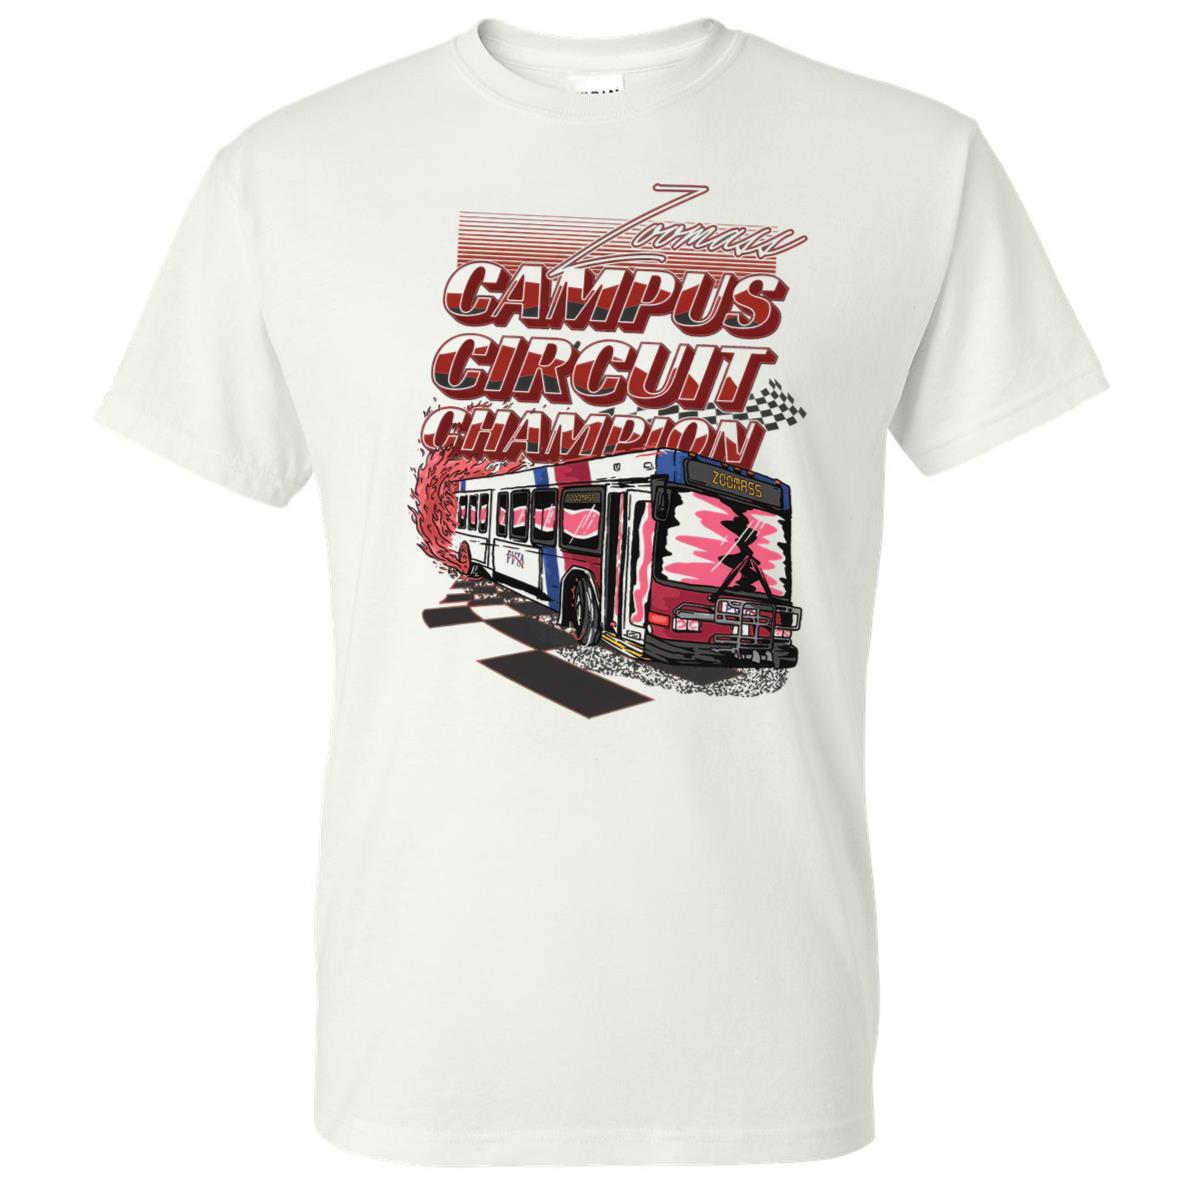 Barstool Campus Circuit Champion Shirt